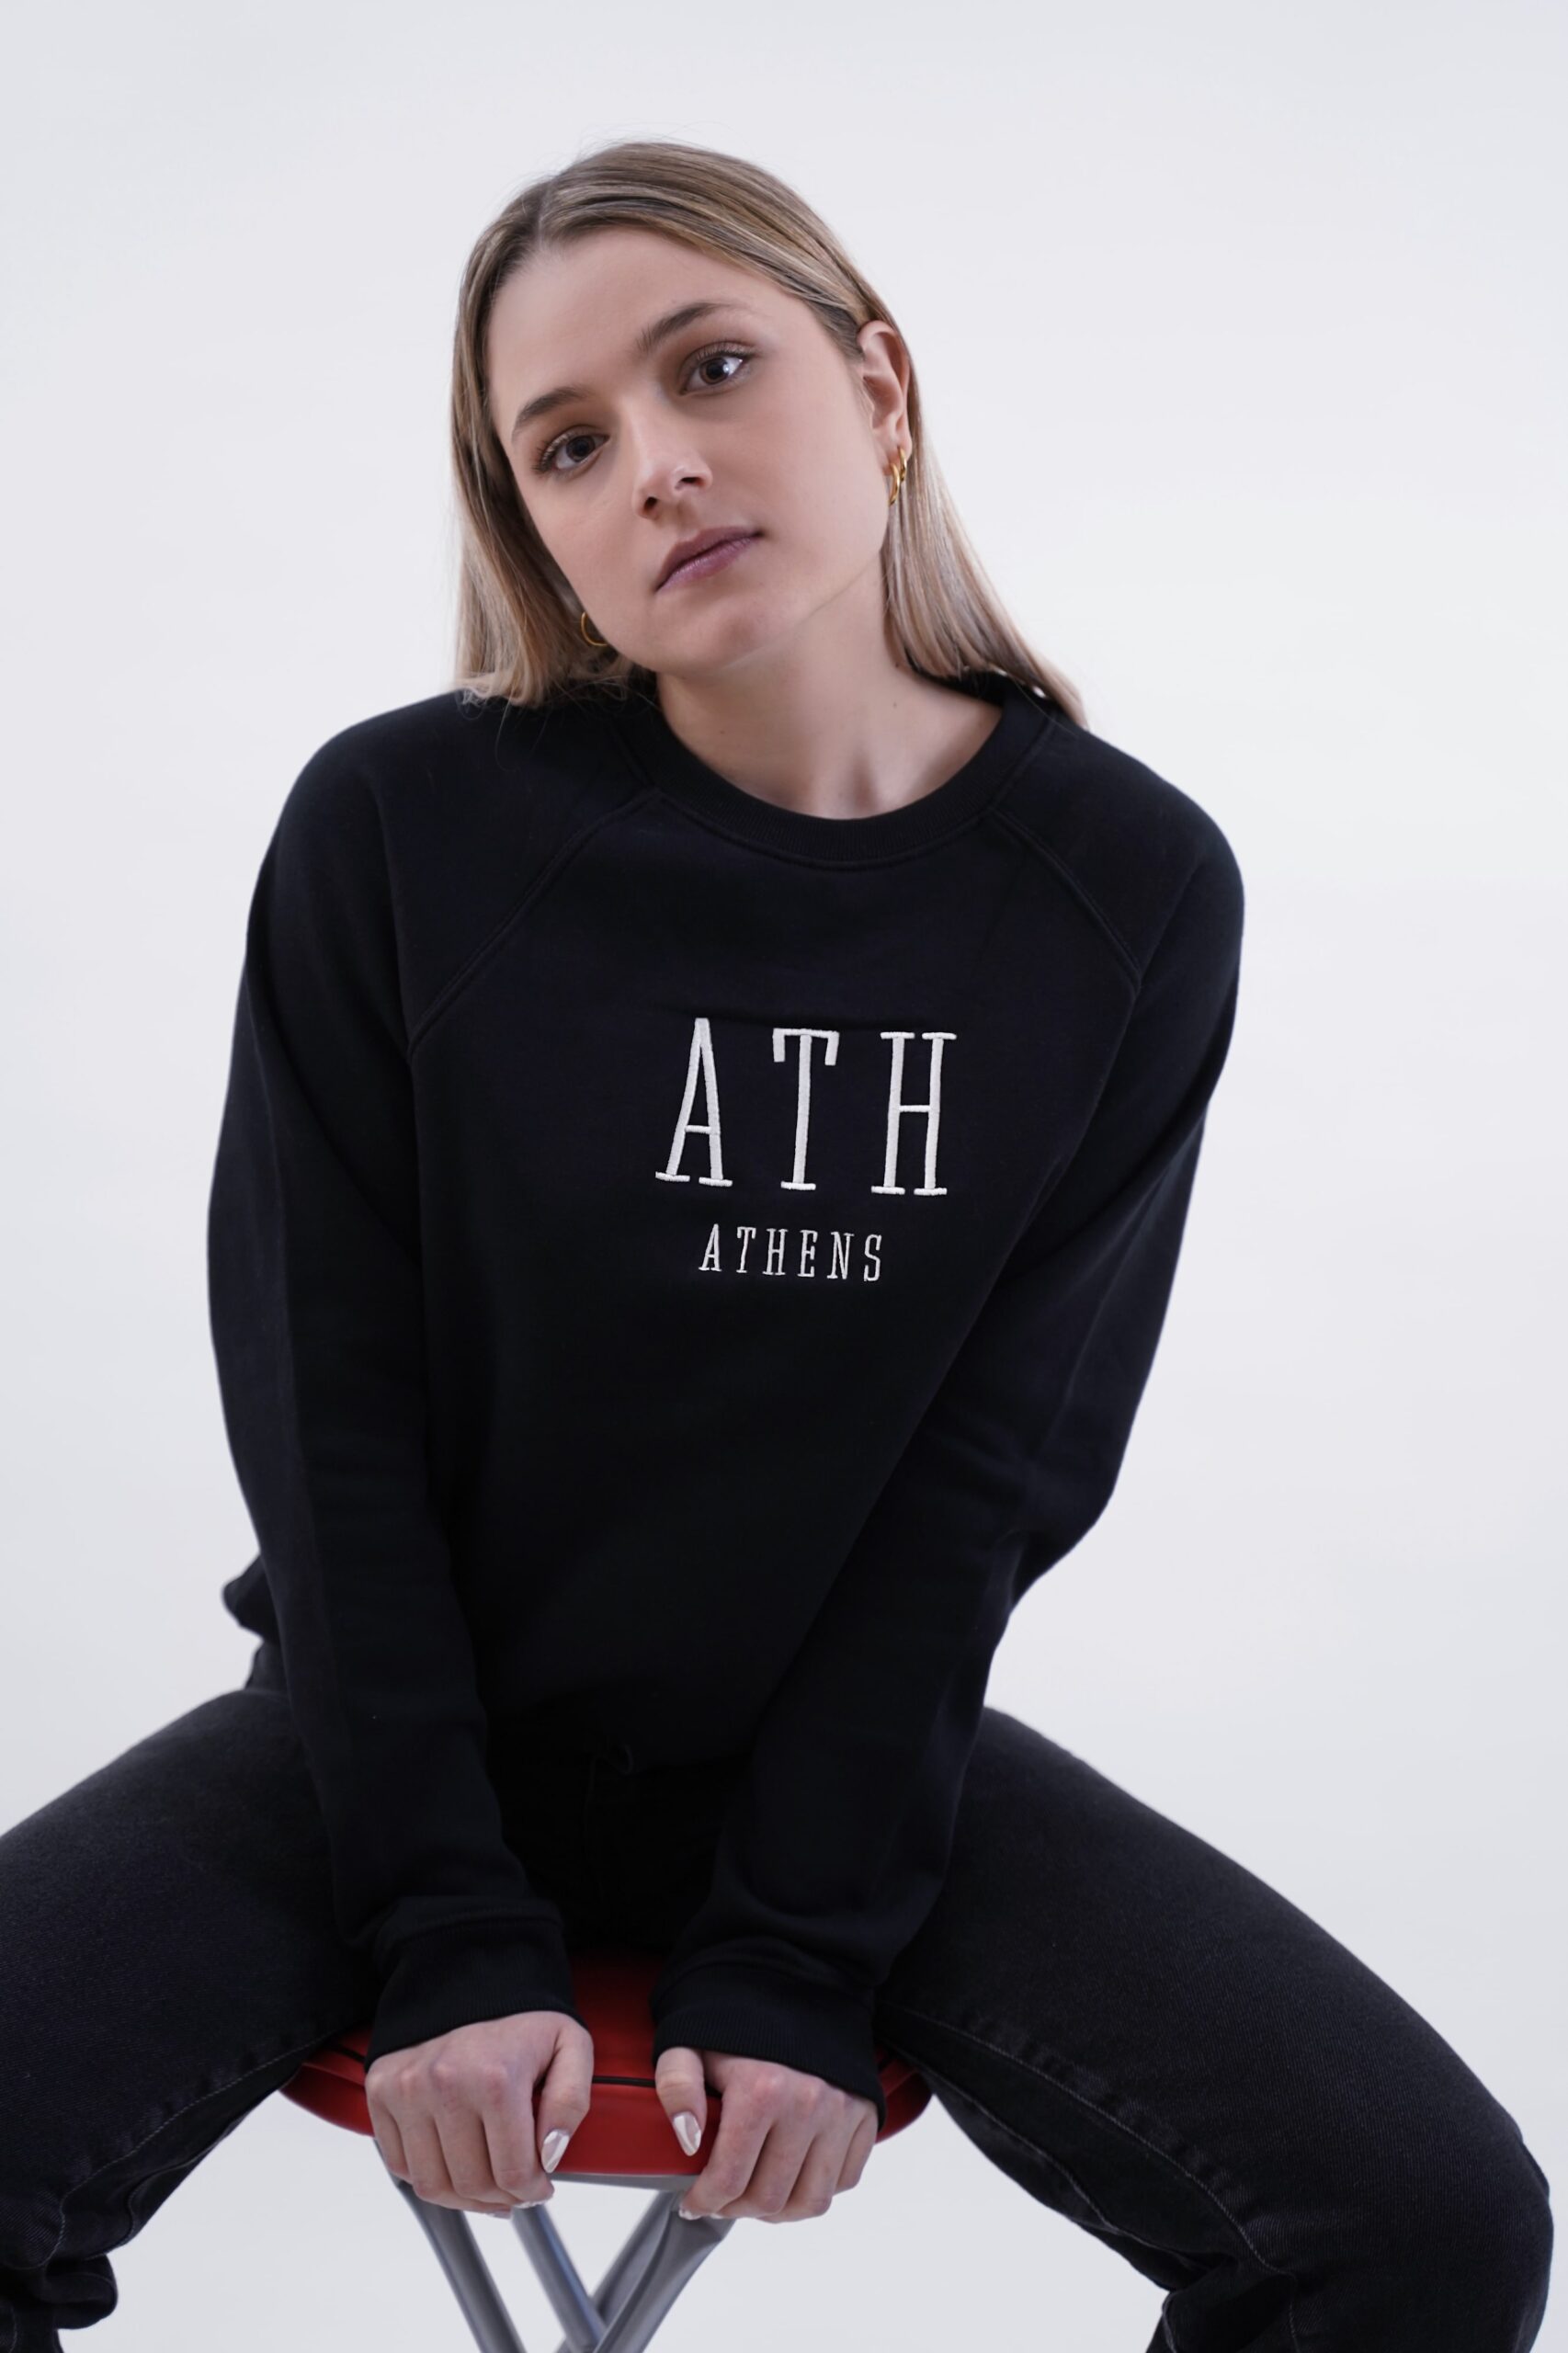 ATH Athens Organic Black Sweatshirt - AeroDrome Clothing